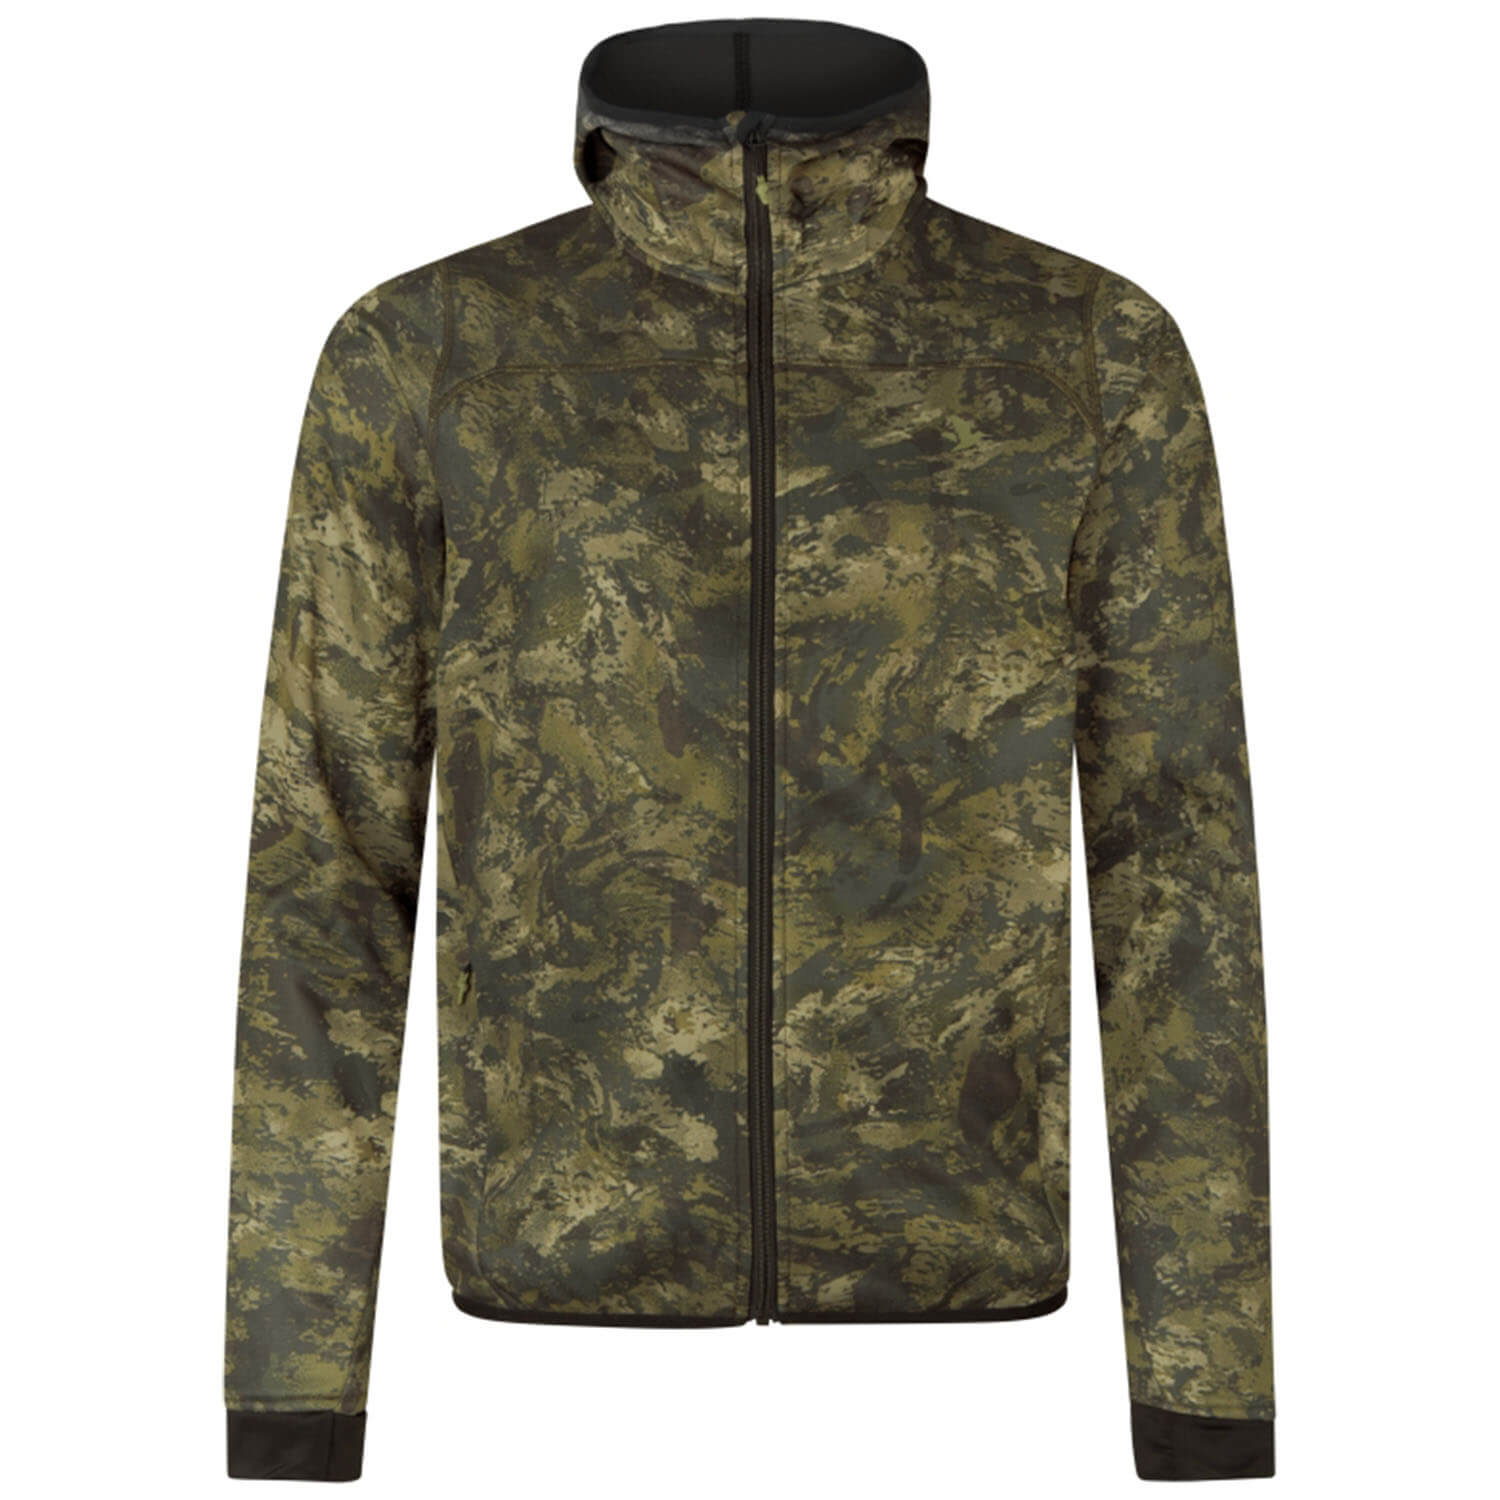 Seeland fleece jacket power camo (InVis green) - Hunting Clothing